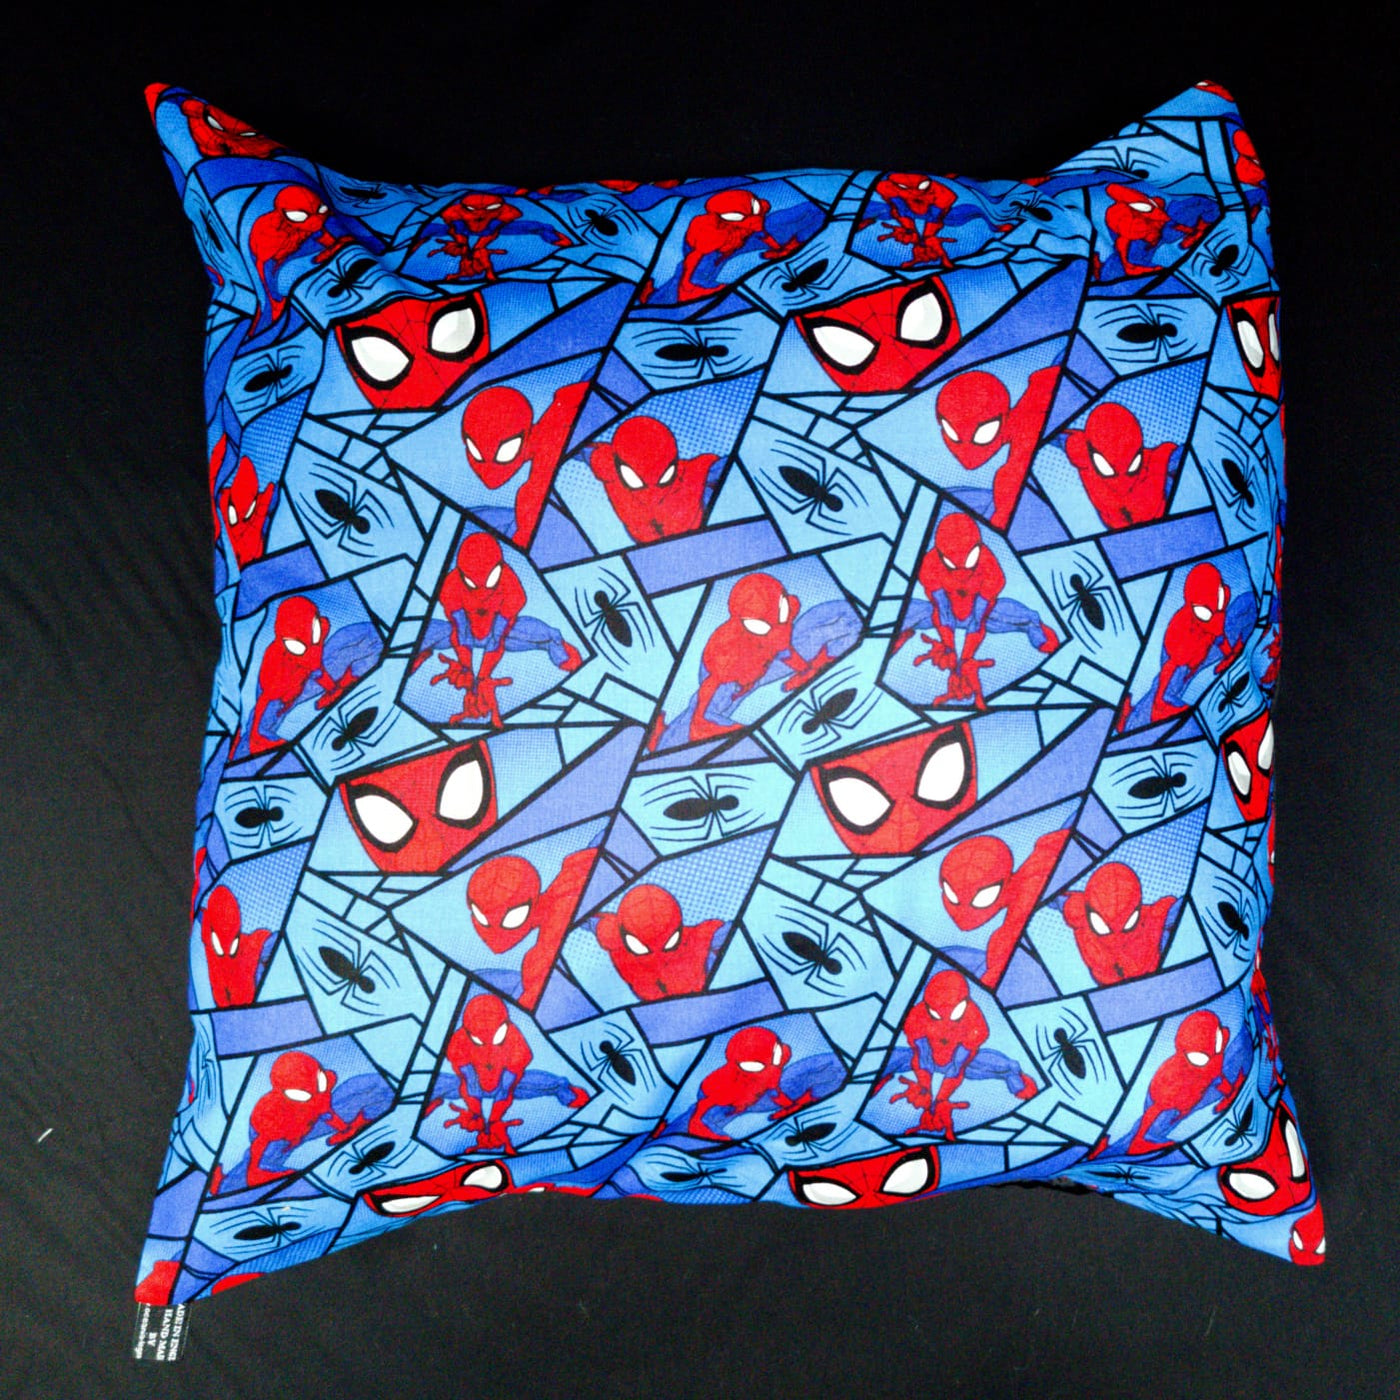 Superhero Cushion Cover Fits 18" x 18" Scatter Cushion